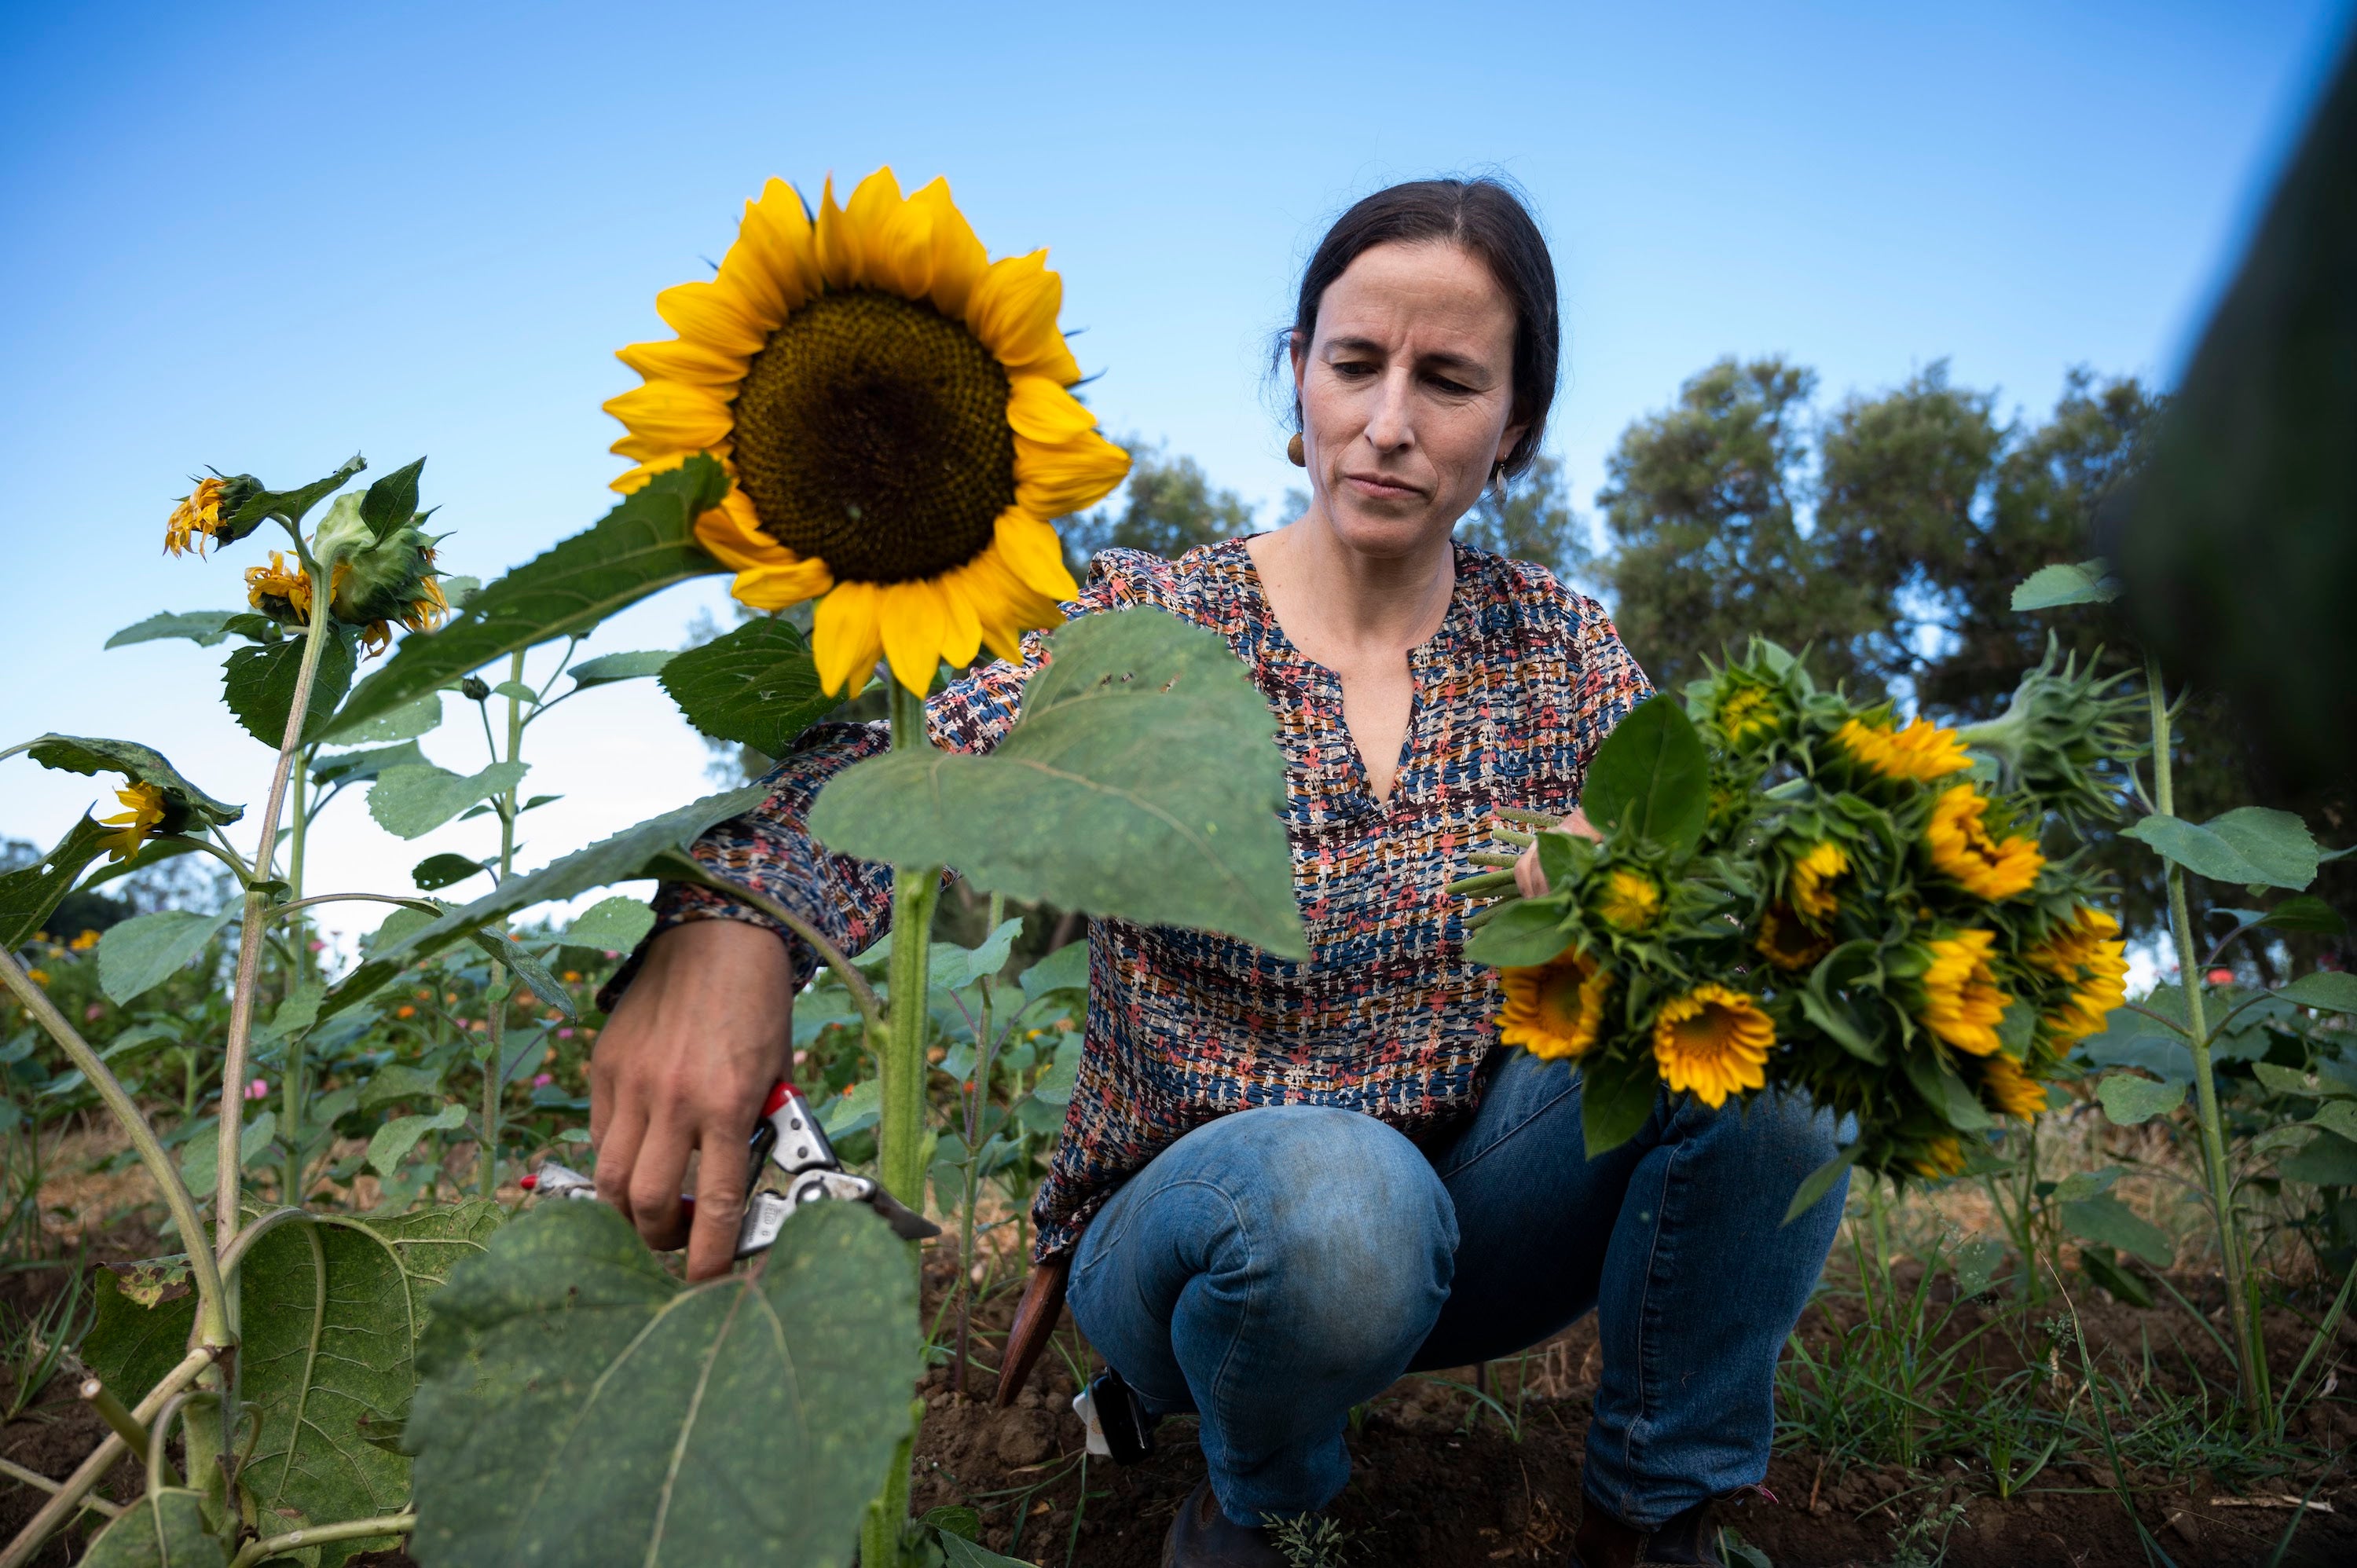 Woman picks sunflower in garden